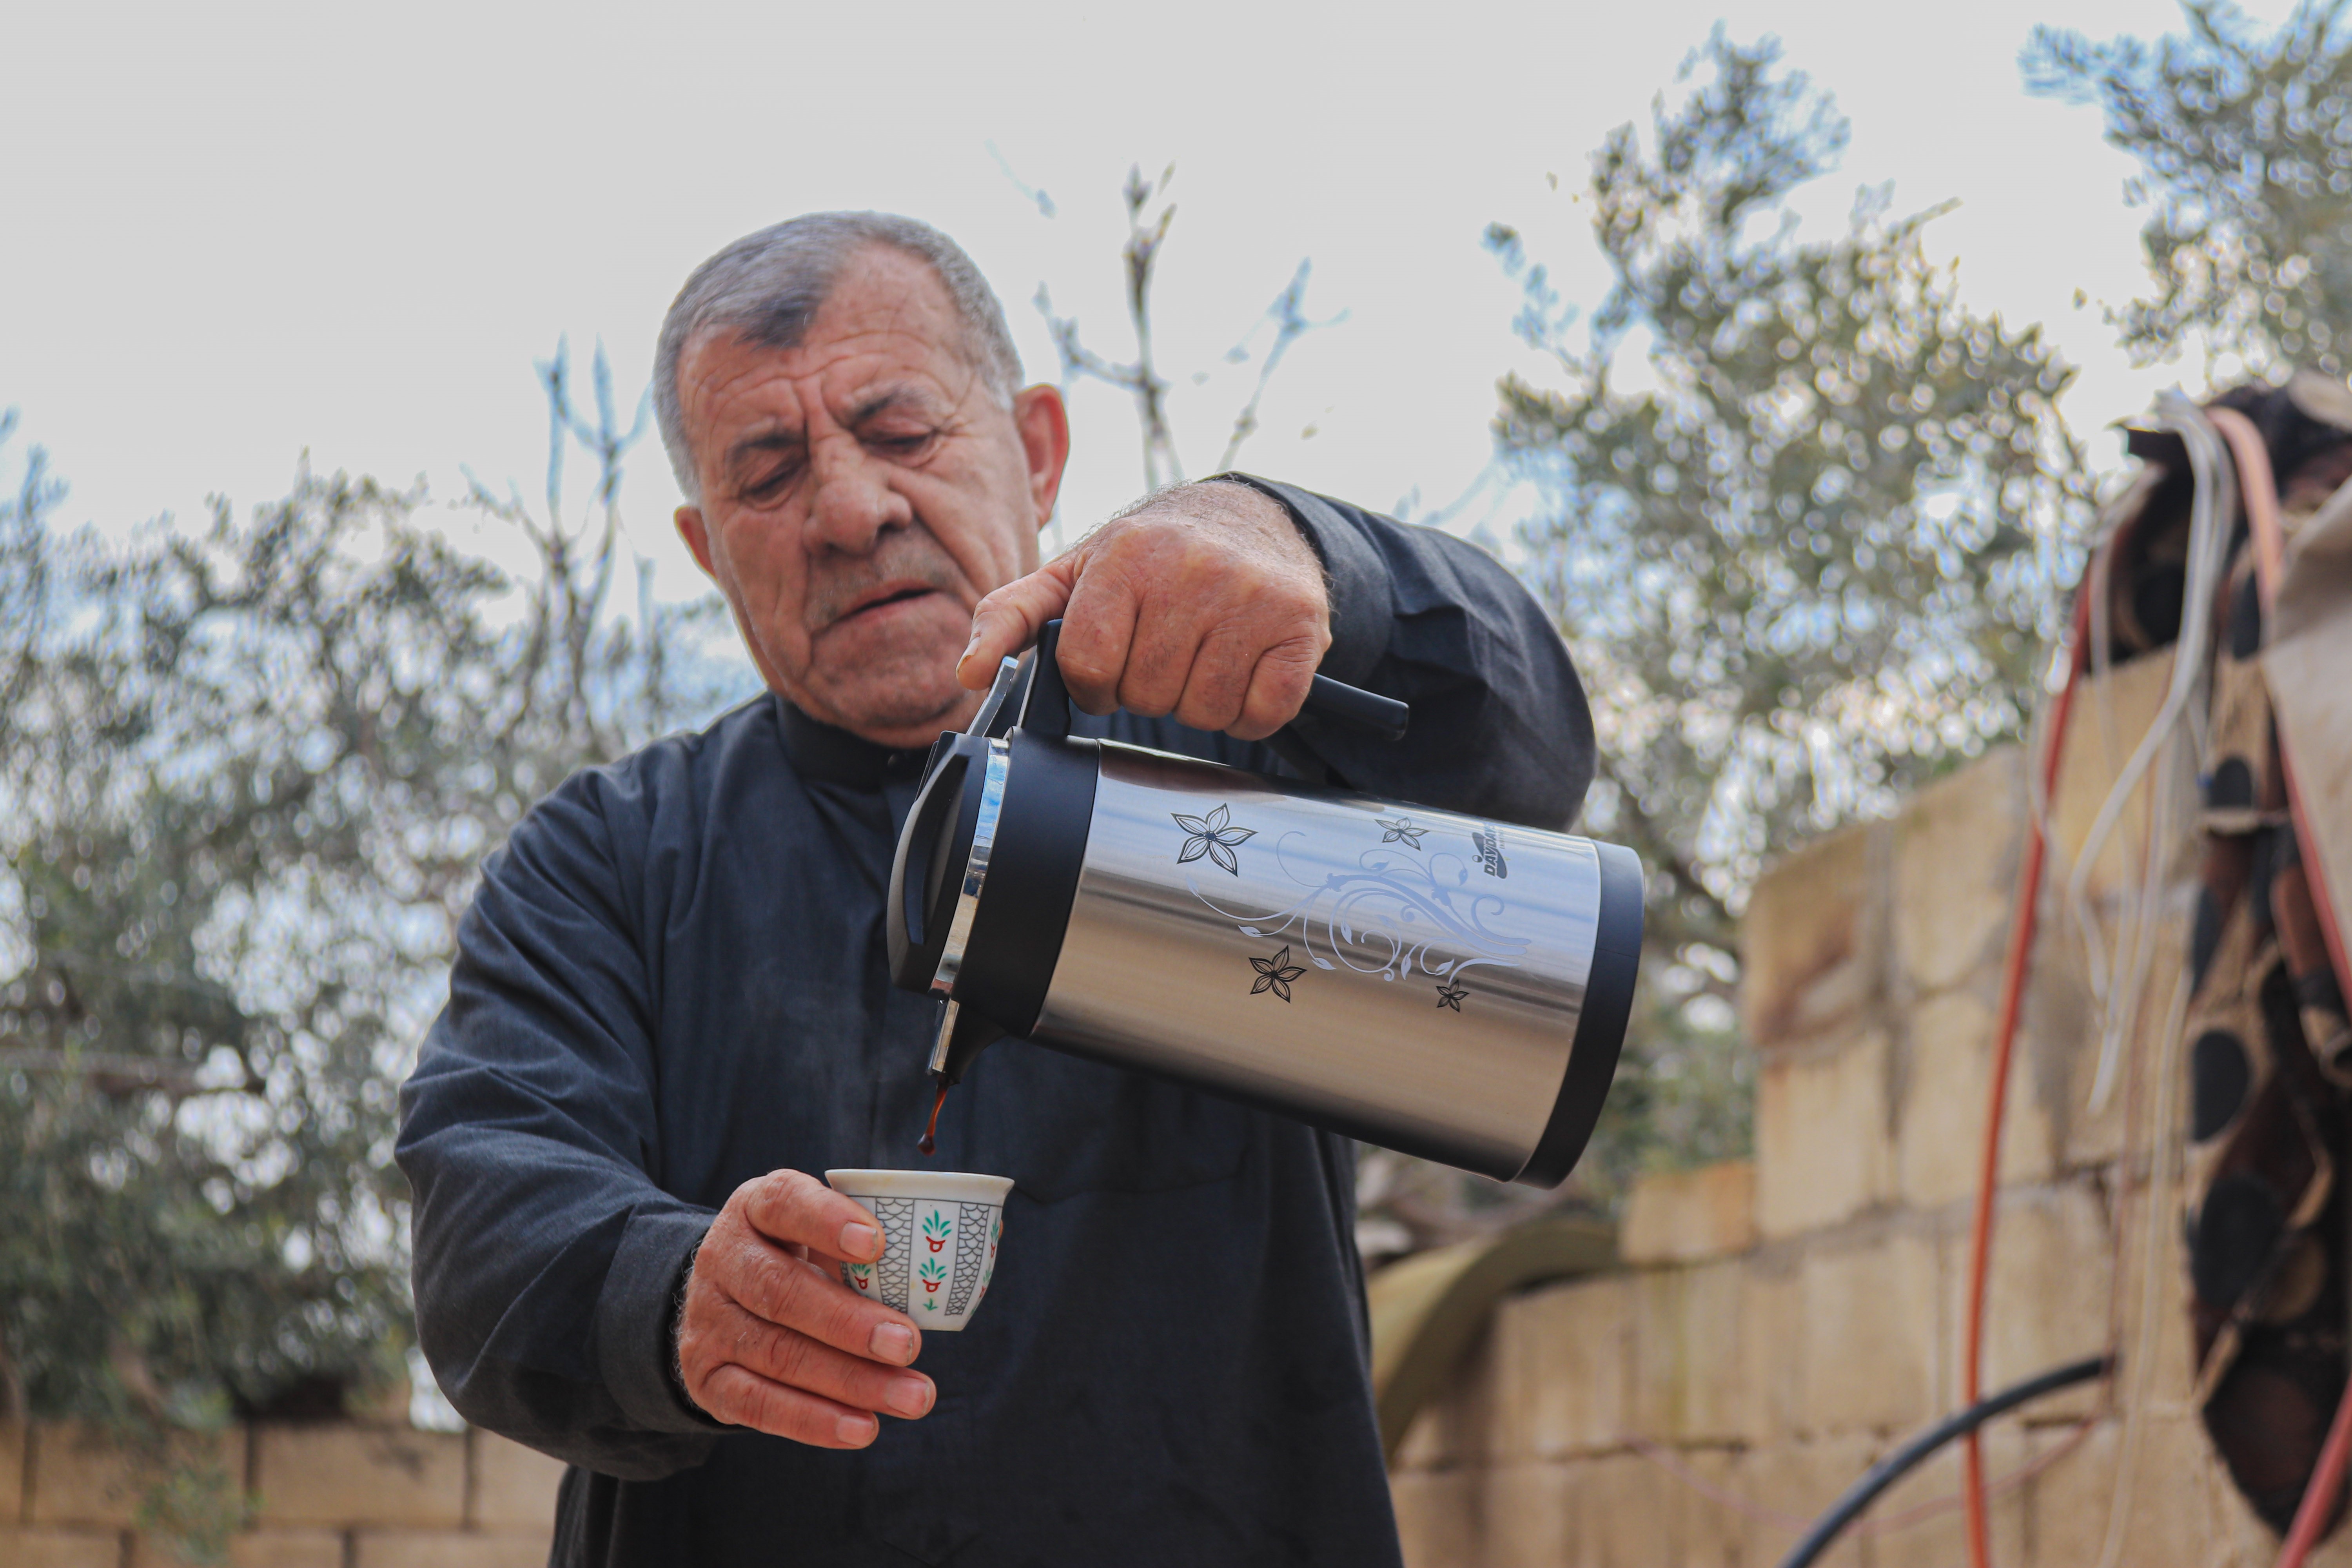 Jassar in pouring coffee to the guests in his home.  ©ULUSLARARASI INSANI YARDIMLAŞMA DERNEĞI, World Vision’s Partner 